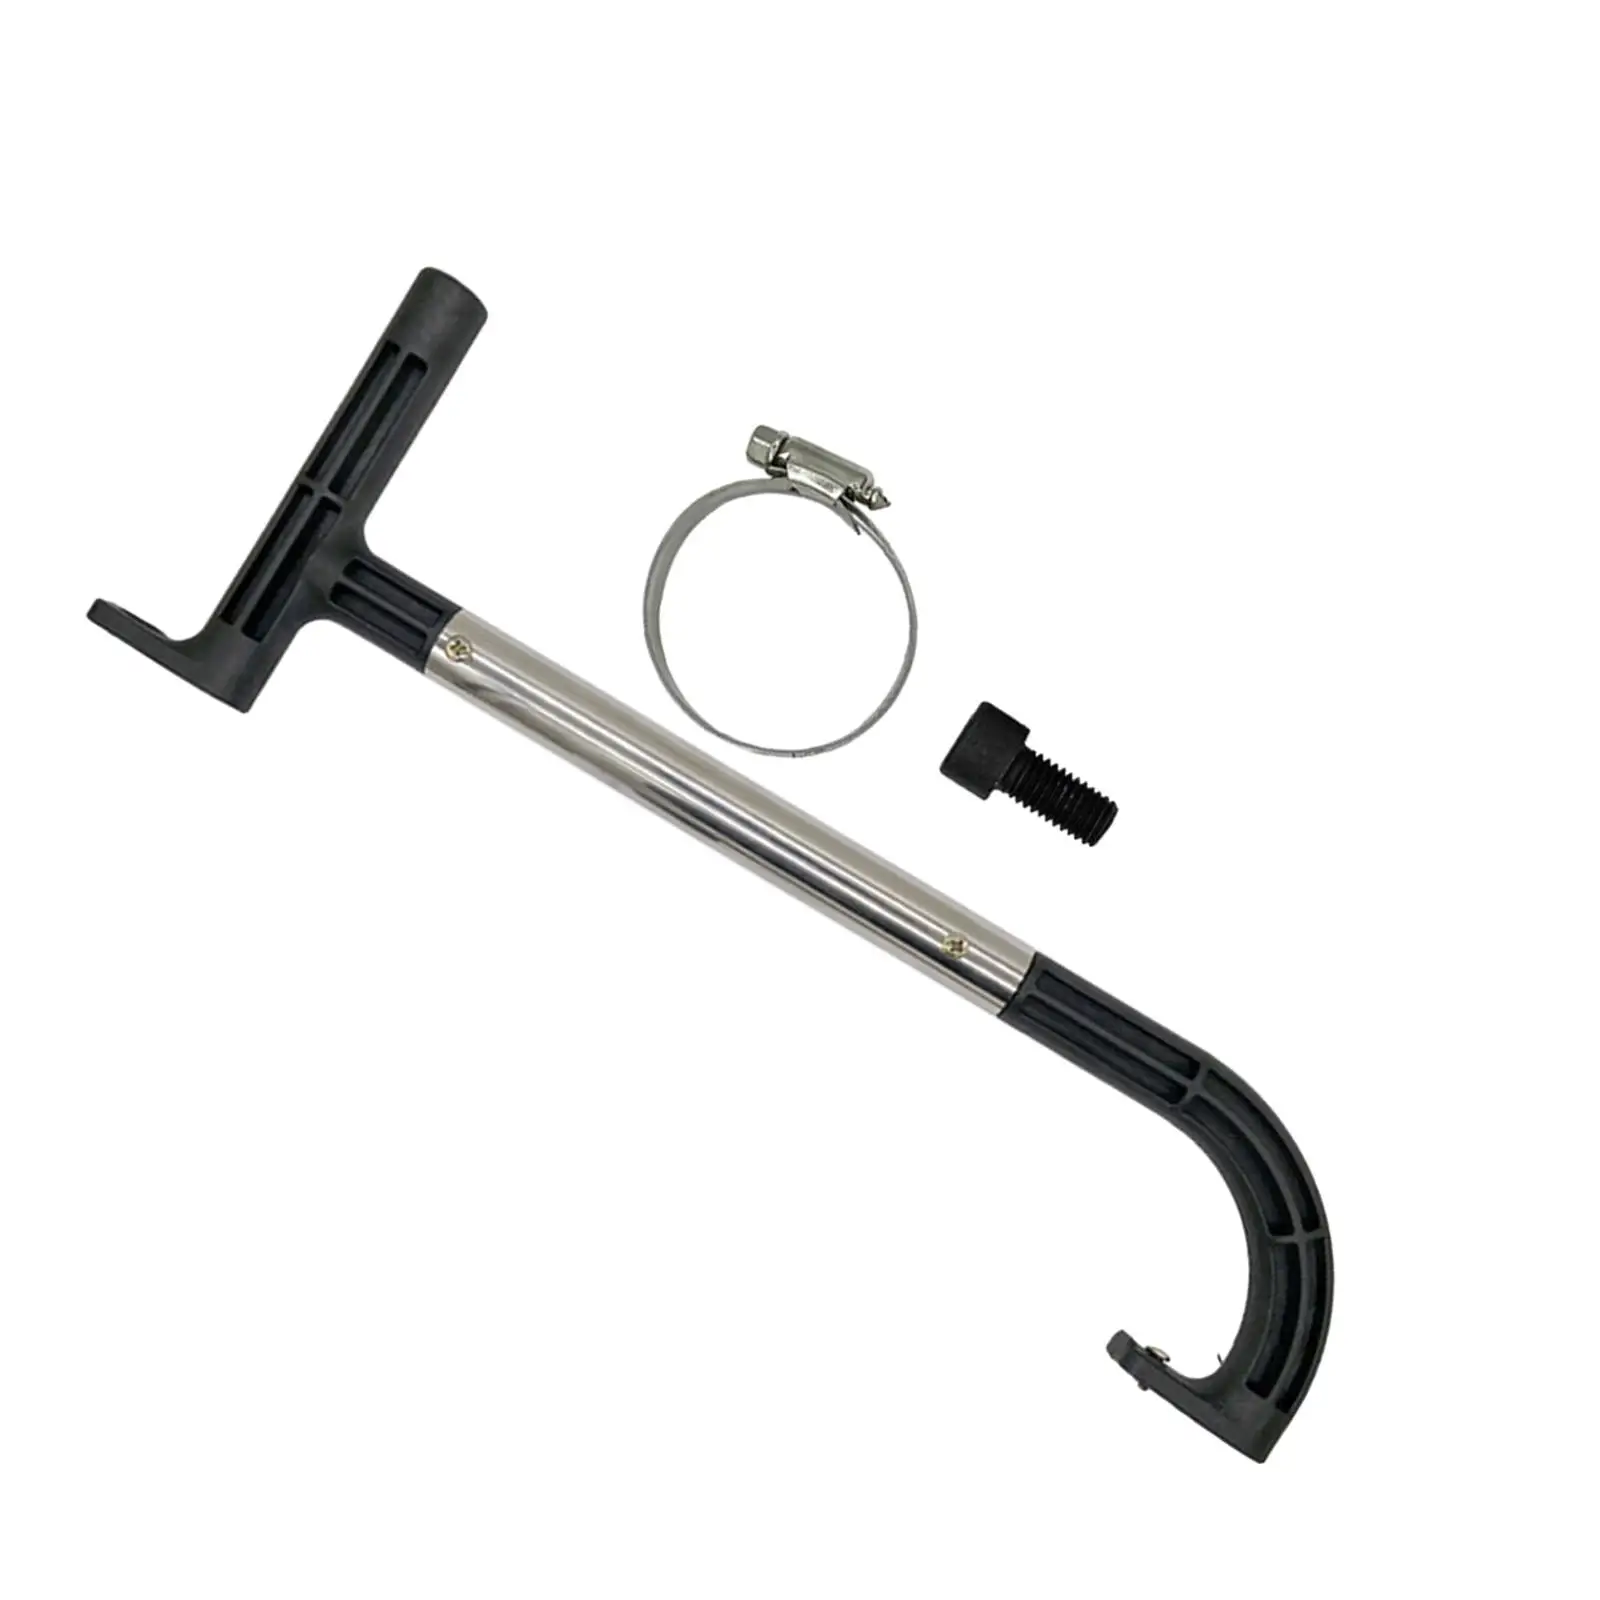 180mm Electric Grinder Polisher Handle Grip Parts Convenient Assemble Good Craftsmanship Durable Adjustable Length Accessory